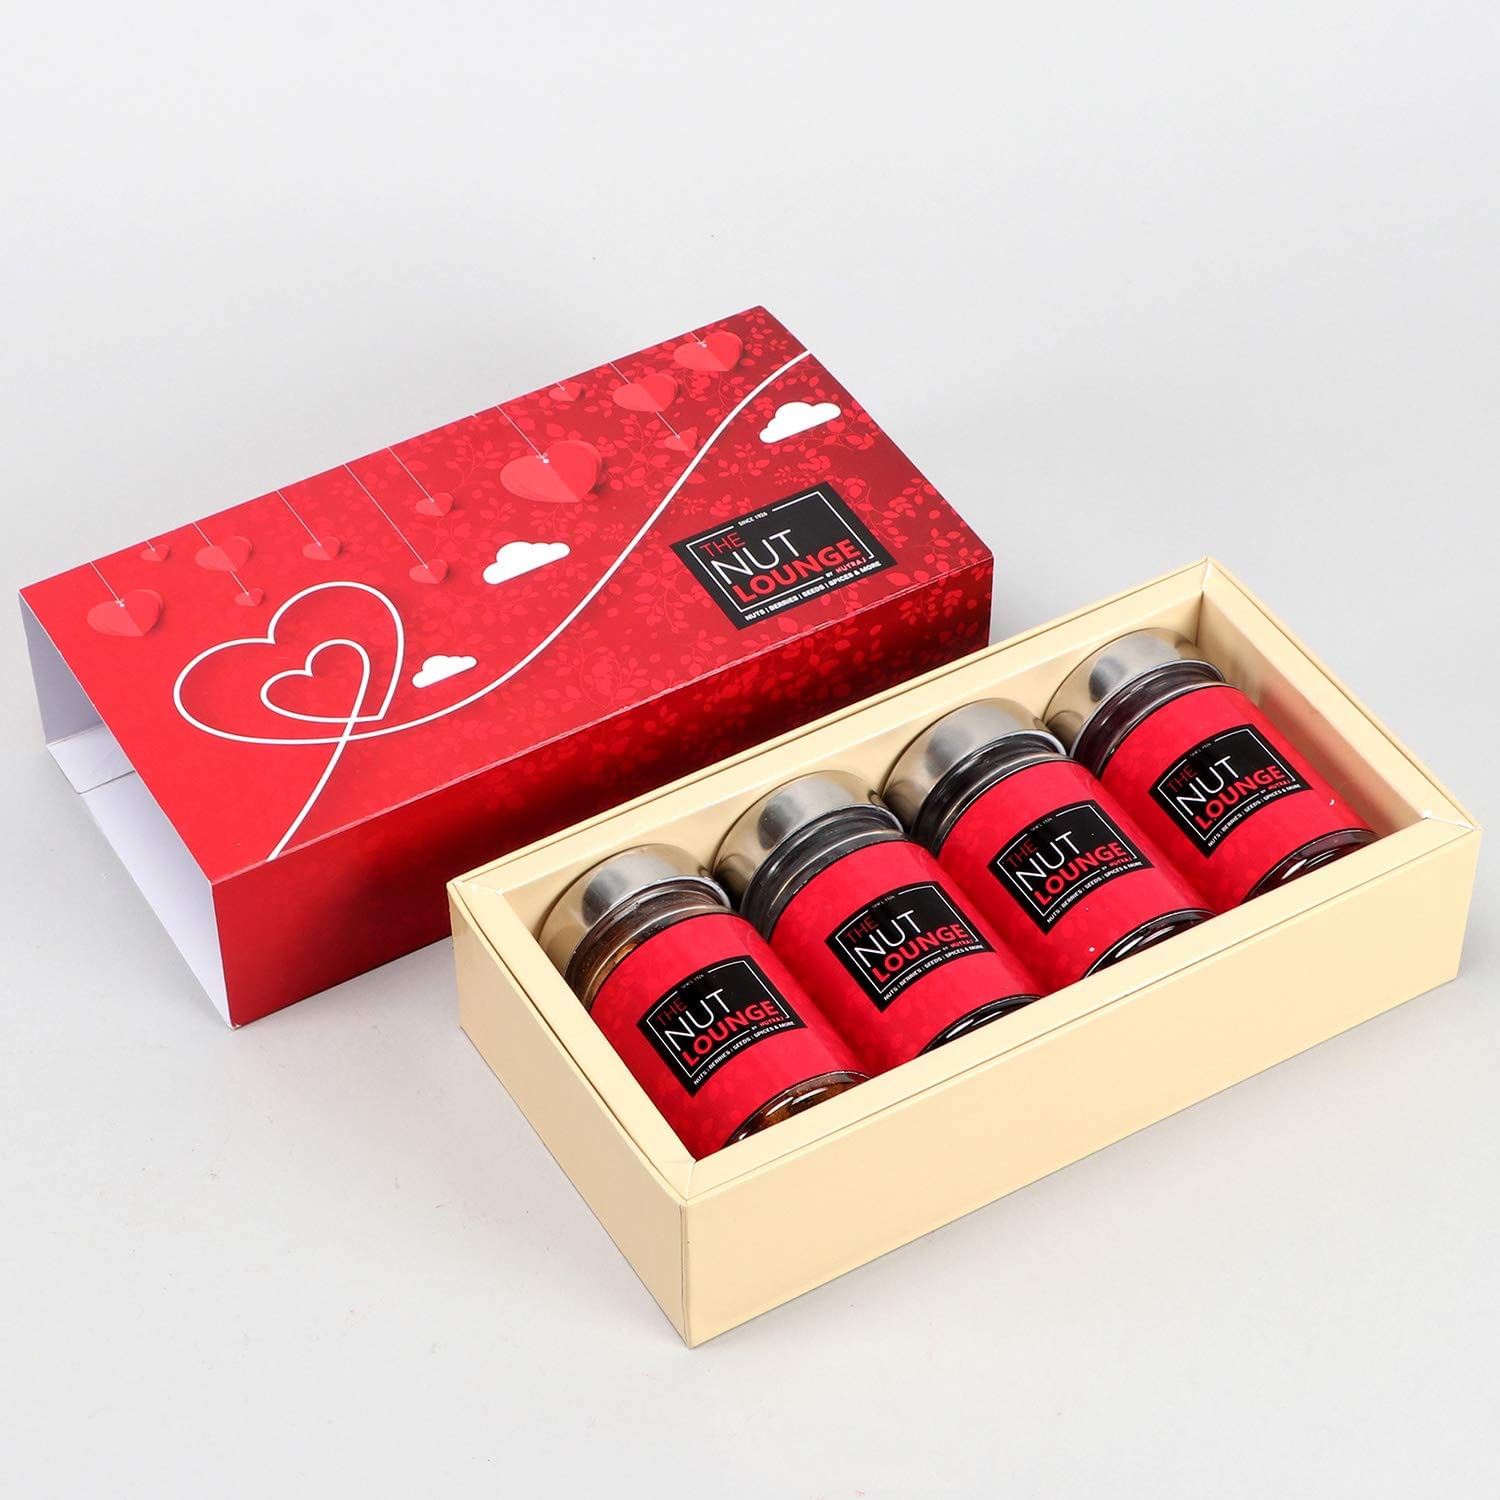 Nut Lounge Chocolate Gift Box 400g (Almond Pista, Mango Raisin, Almond Kulfi, Cranberry Chocolate 100g Each)